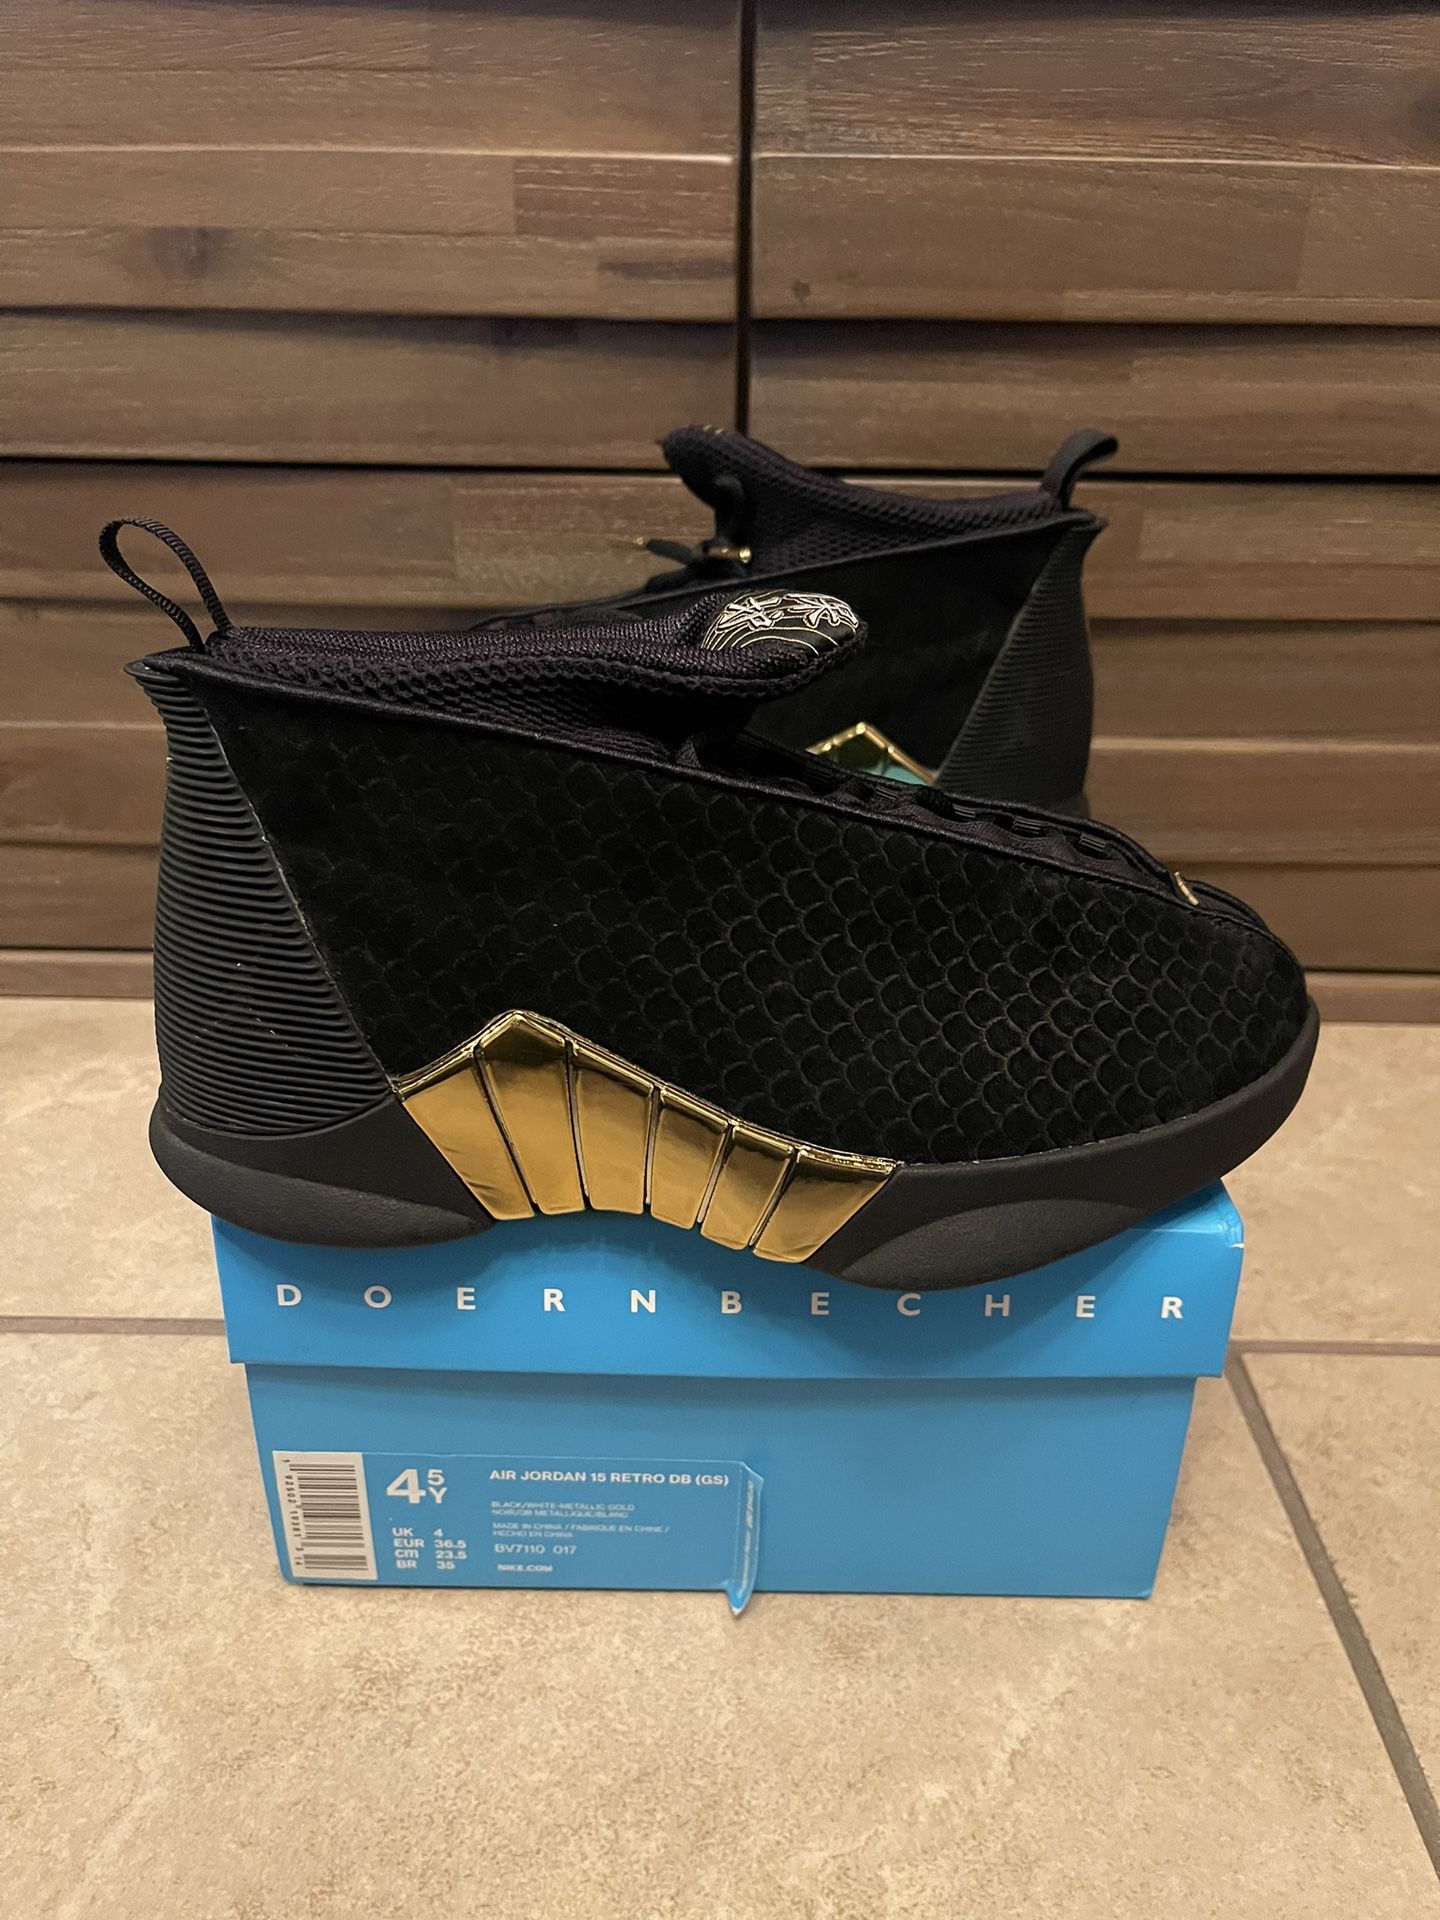 Air Jordan 15 “dorenbecher” Size 4.5y